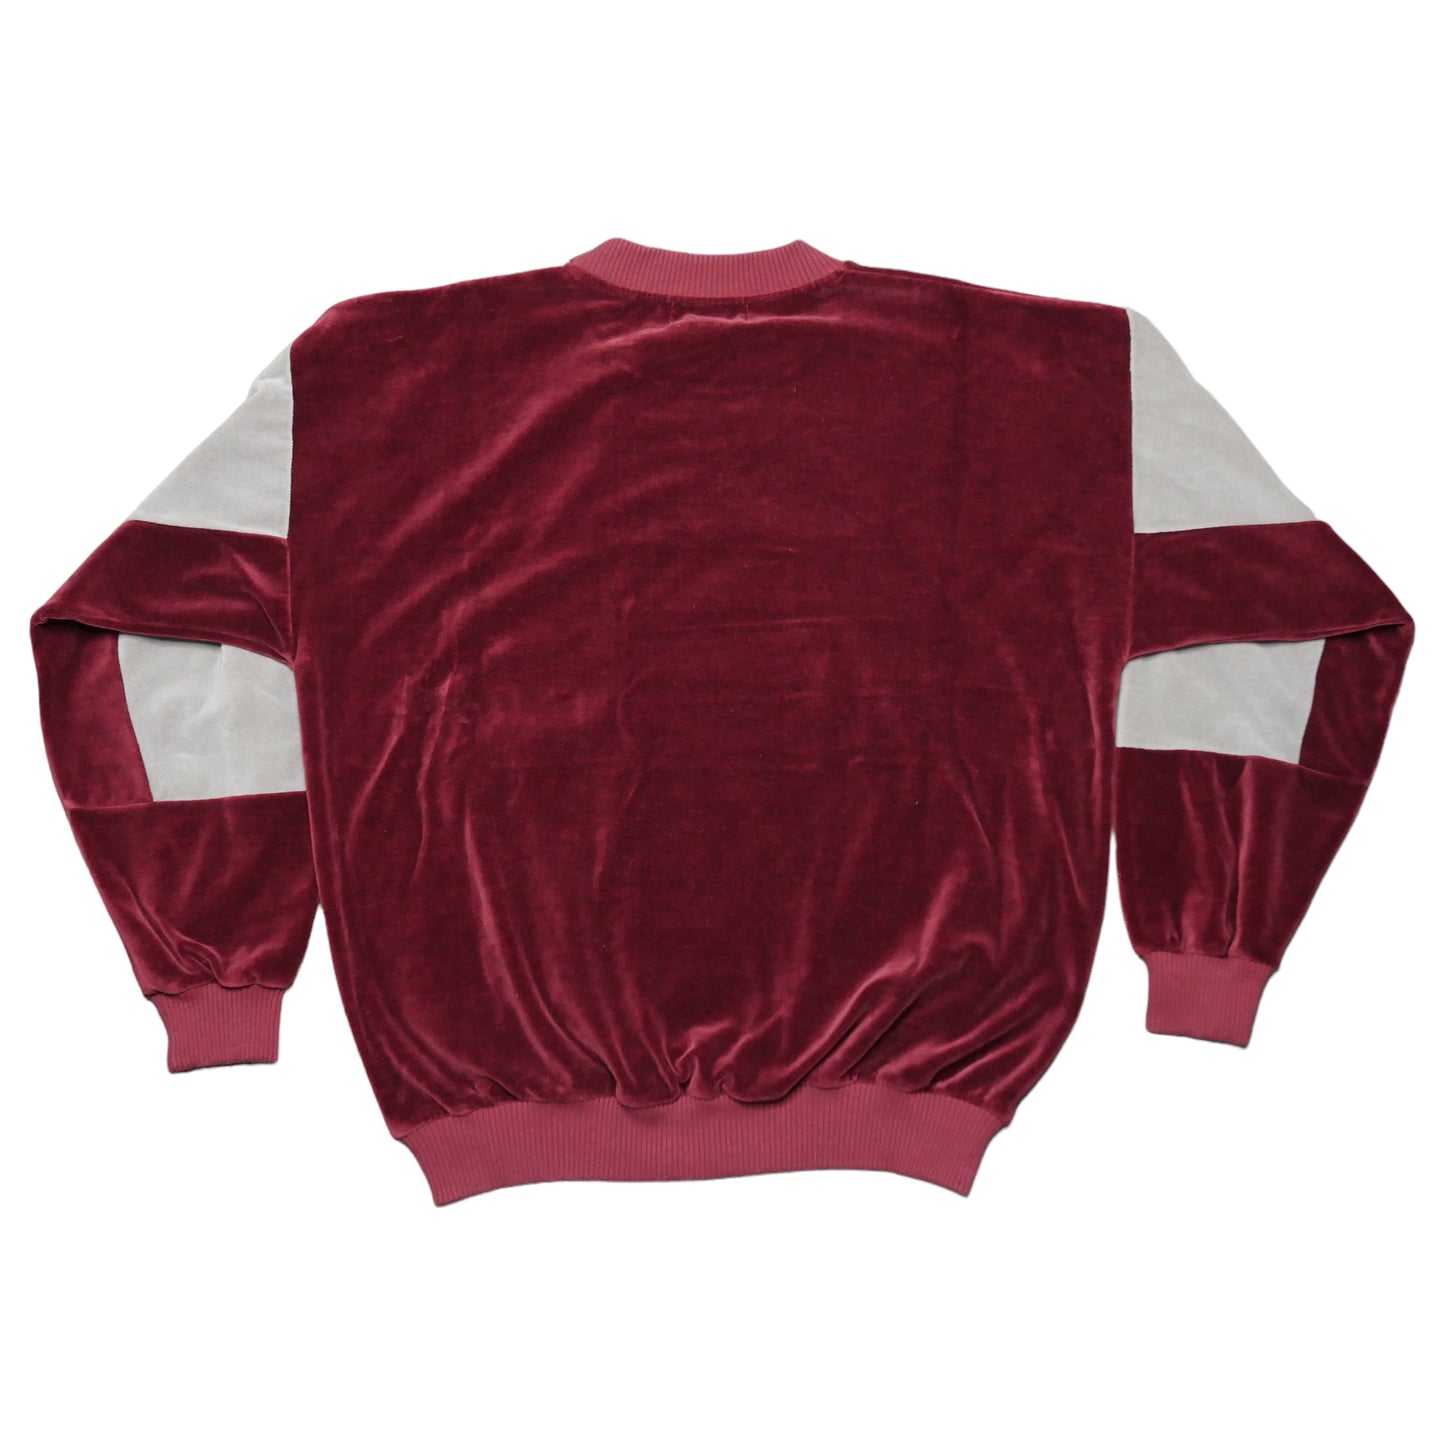 Sansabelt Velour Crewneck Sweatshirt - Medium